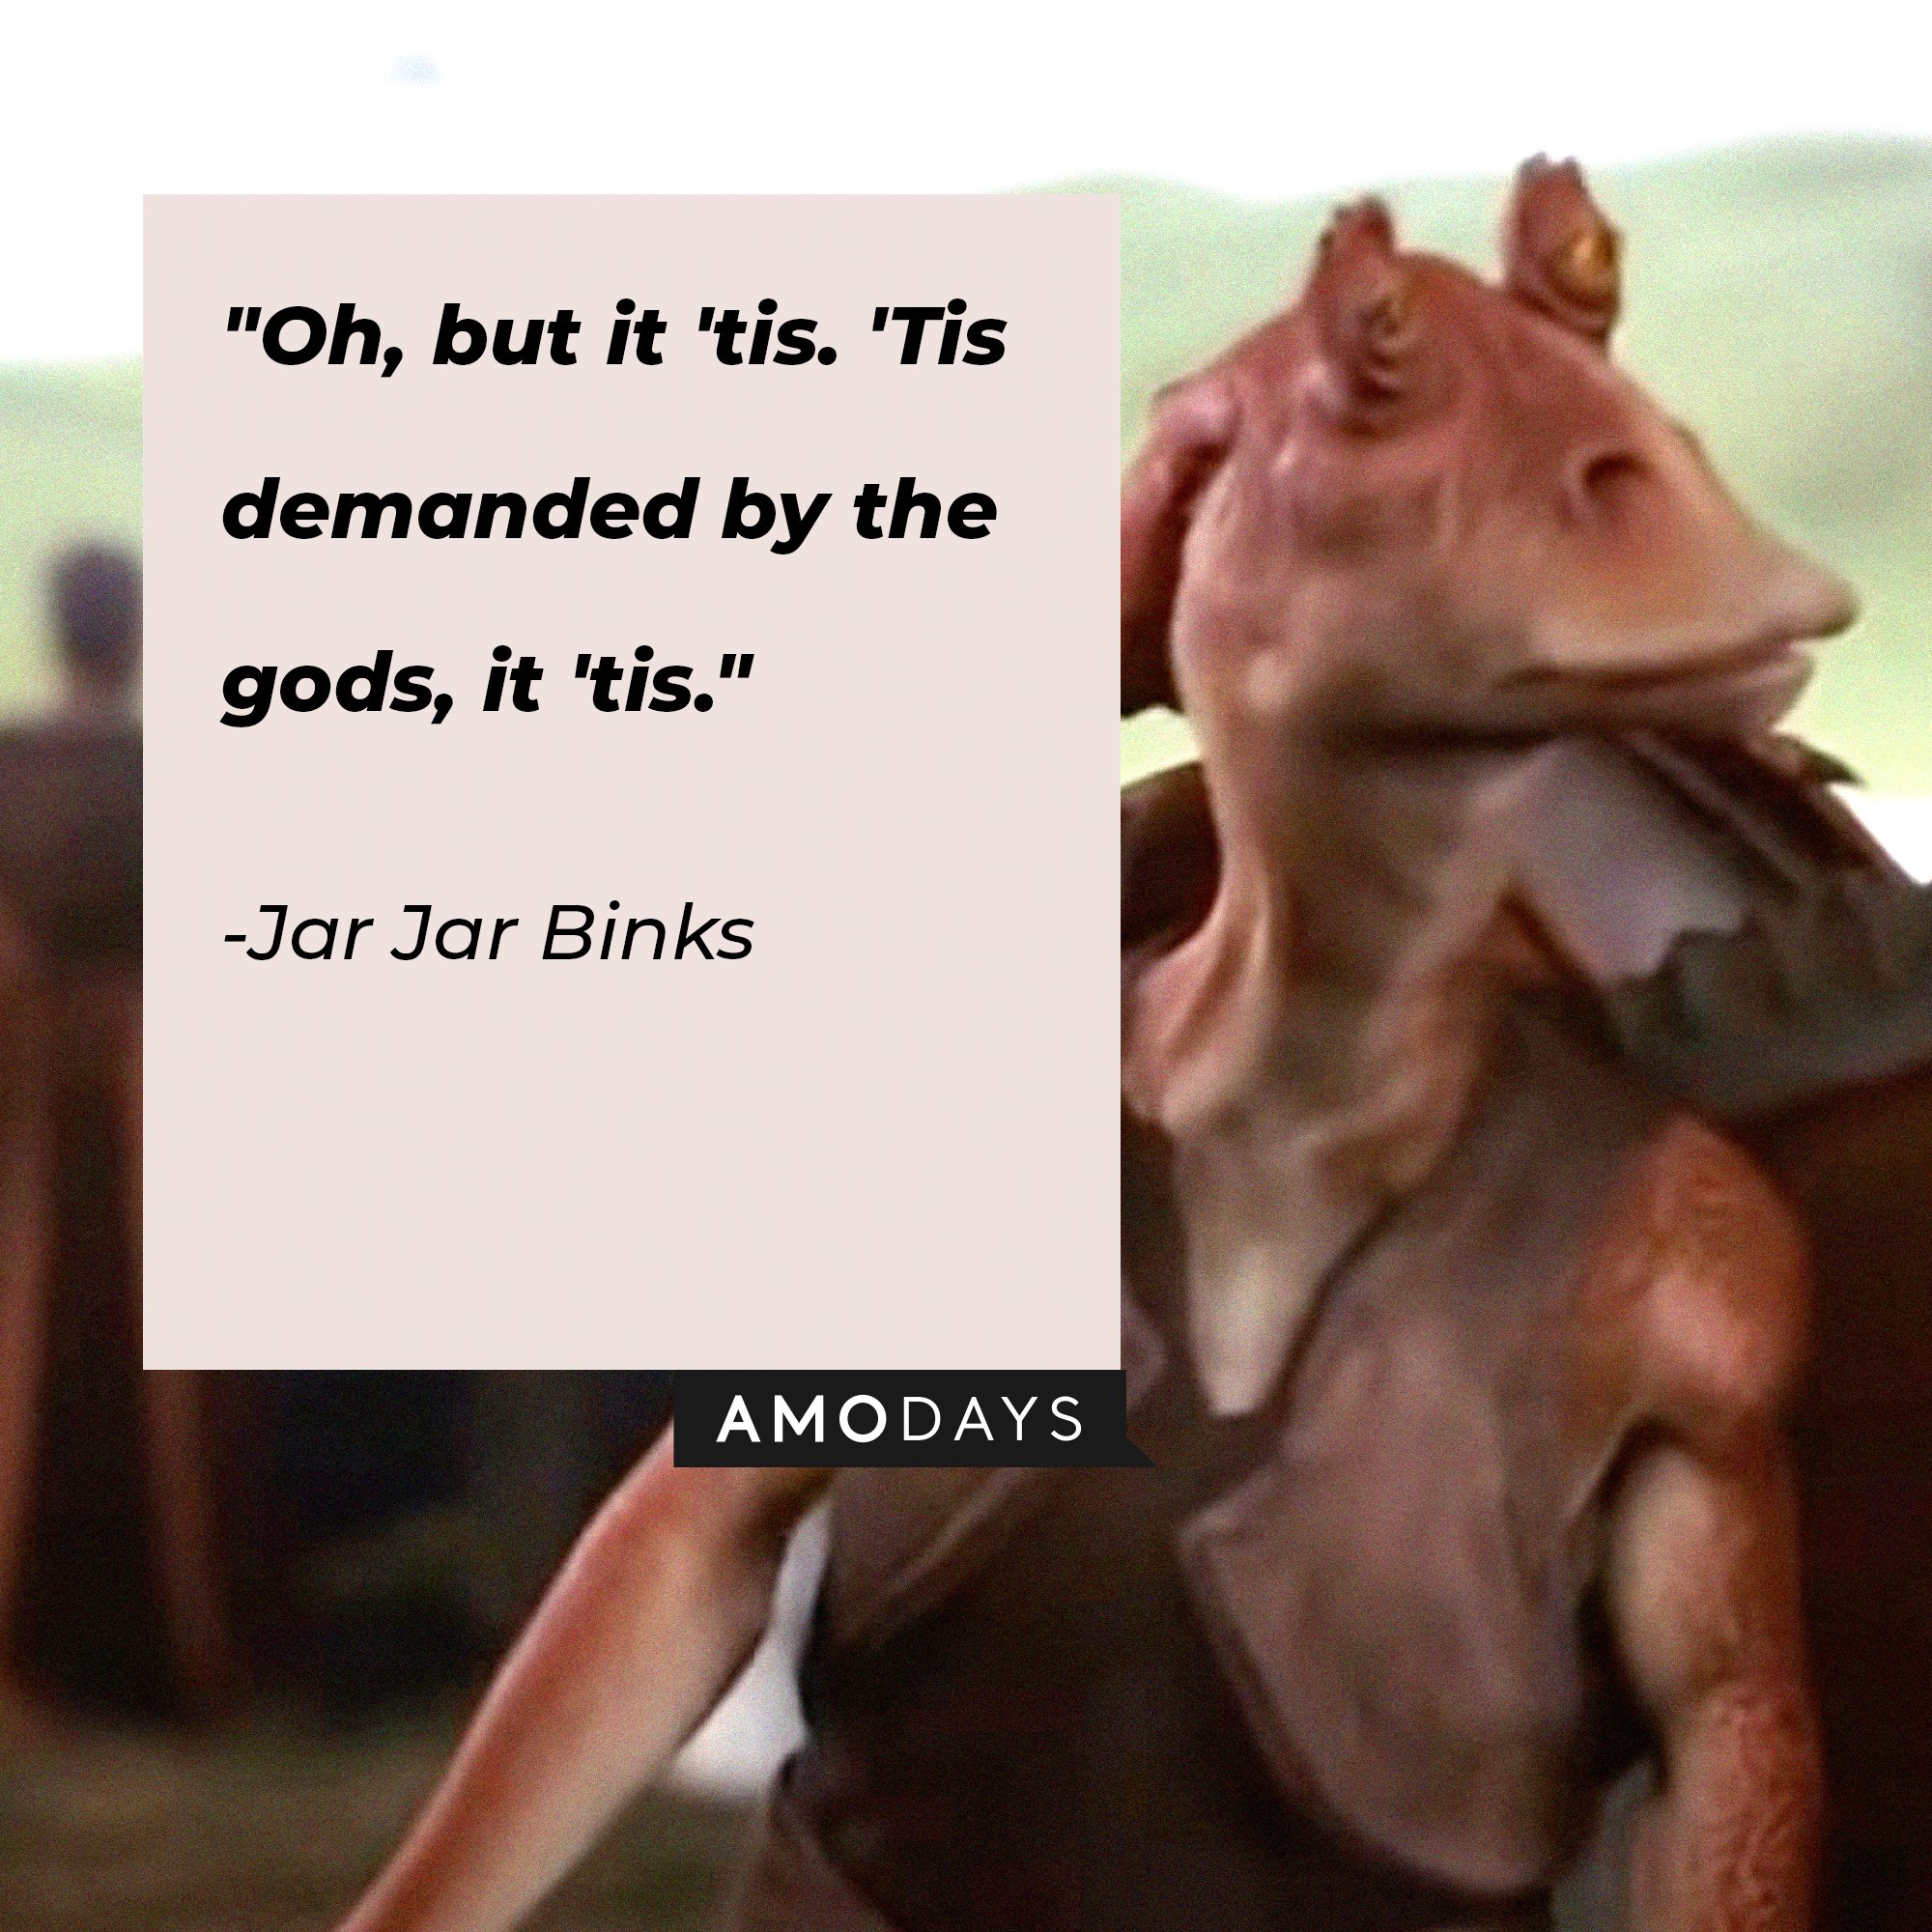  Jar Jar Binks’ quote: “Oh, But It ‘tis. ‘Tis demanded  by the Gods, it ‘tis.” | Image: AmoDays